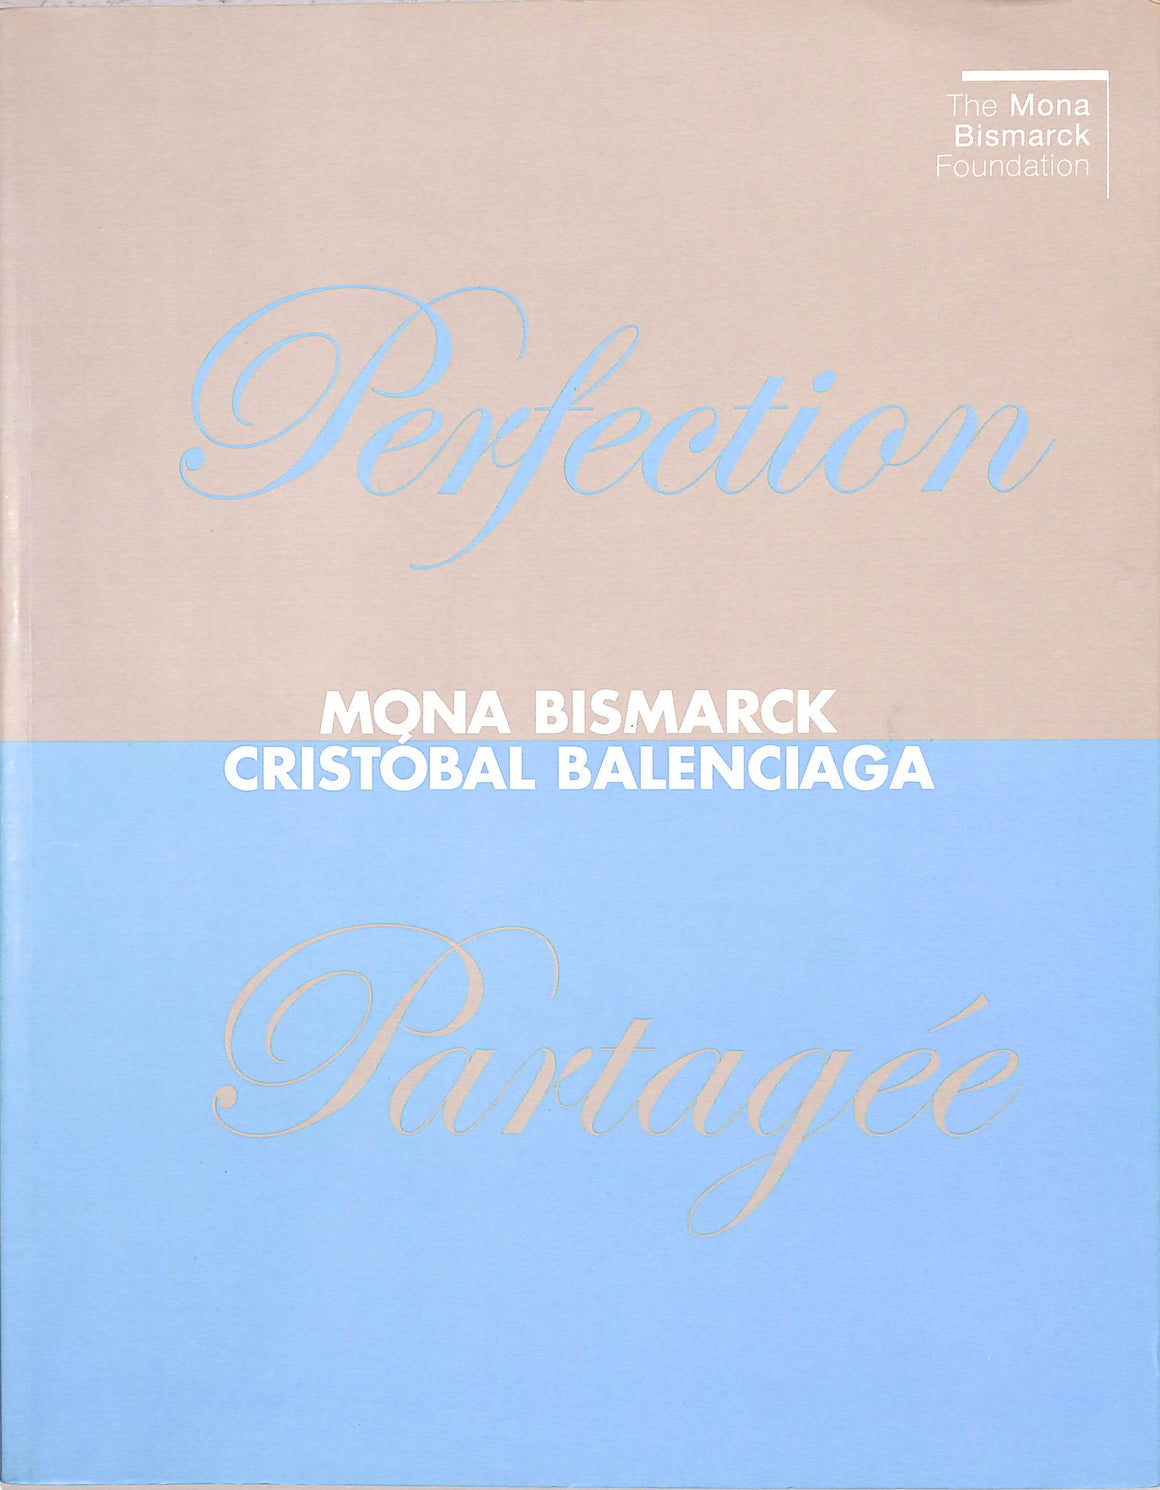 "Perfection Partagee Mona Bismarck Cristobal Balenciaga" 2006